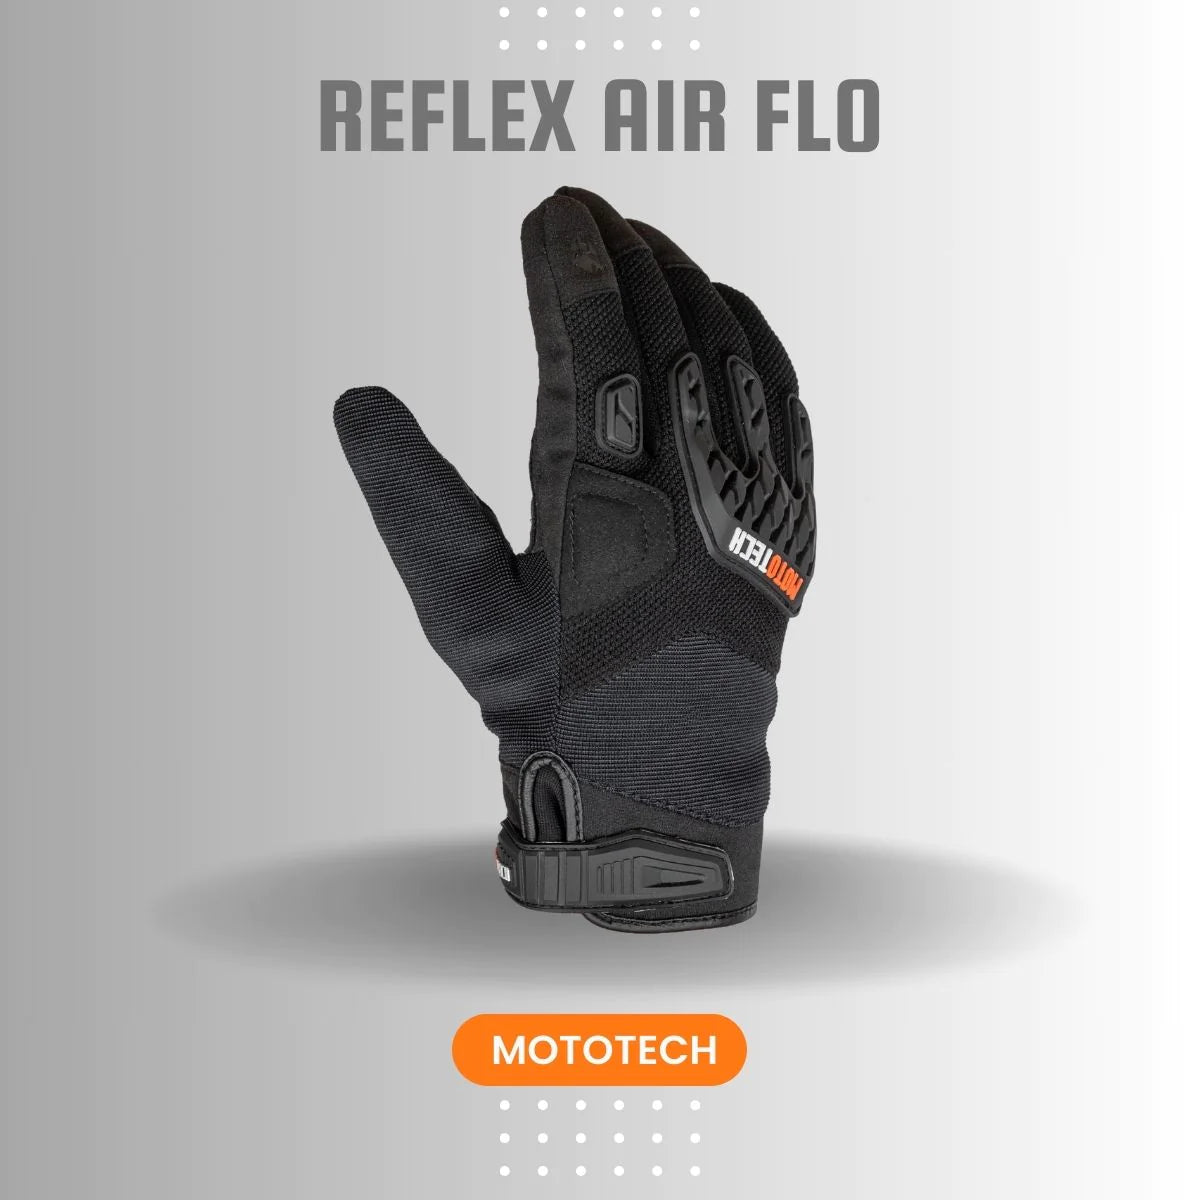 Mototech Reflex Air Flo Dual Sport Riding Gloves - Black